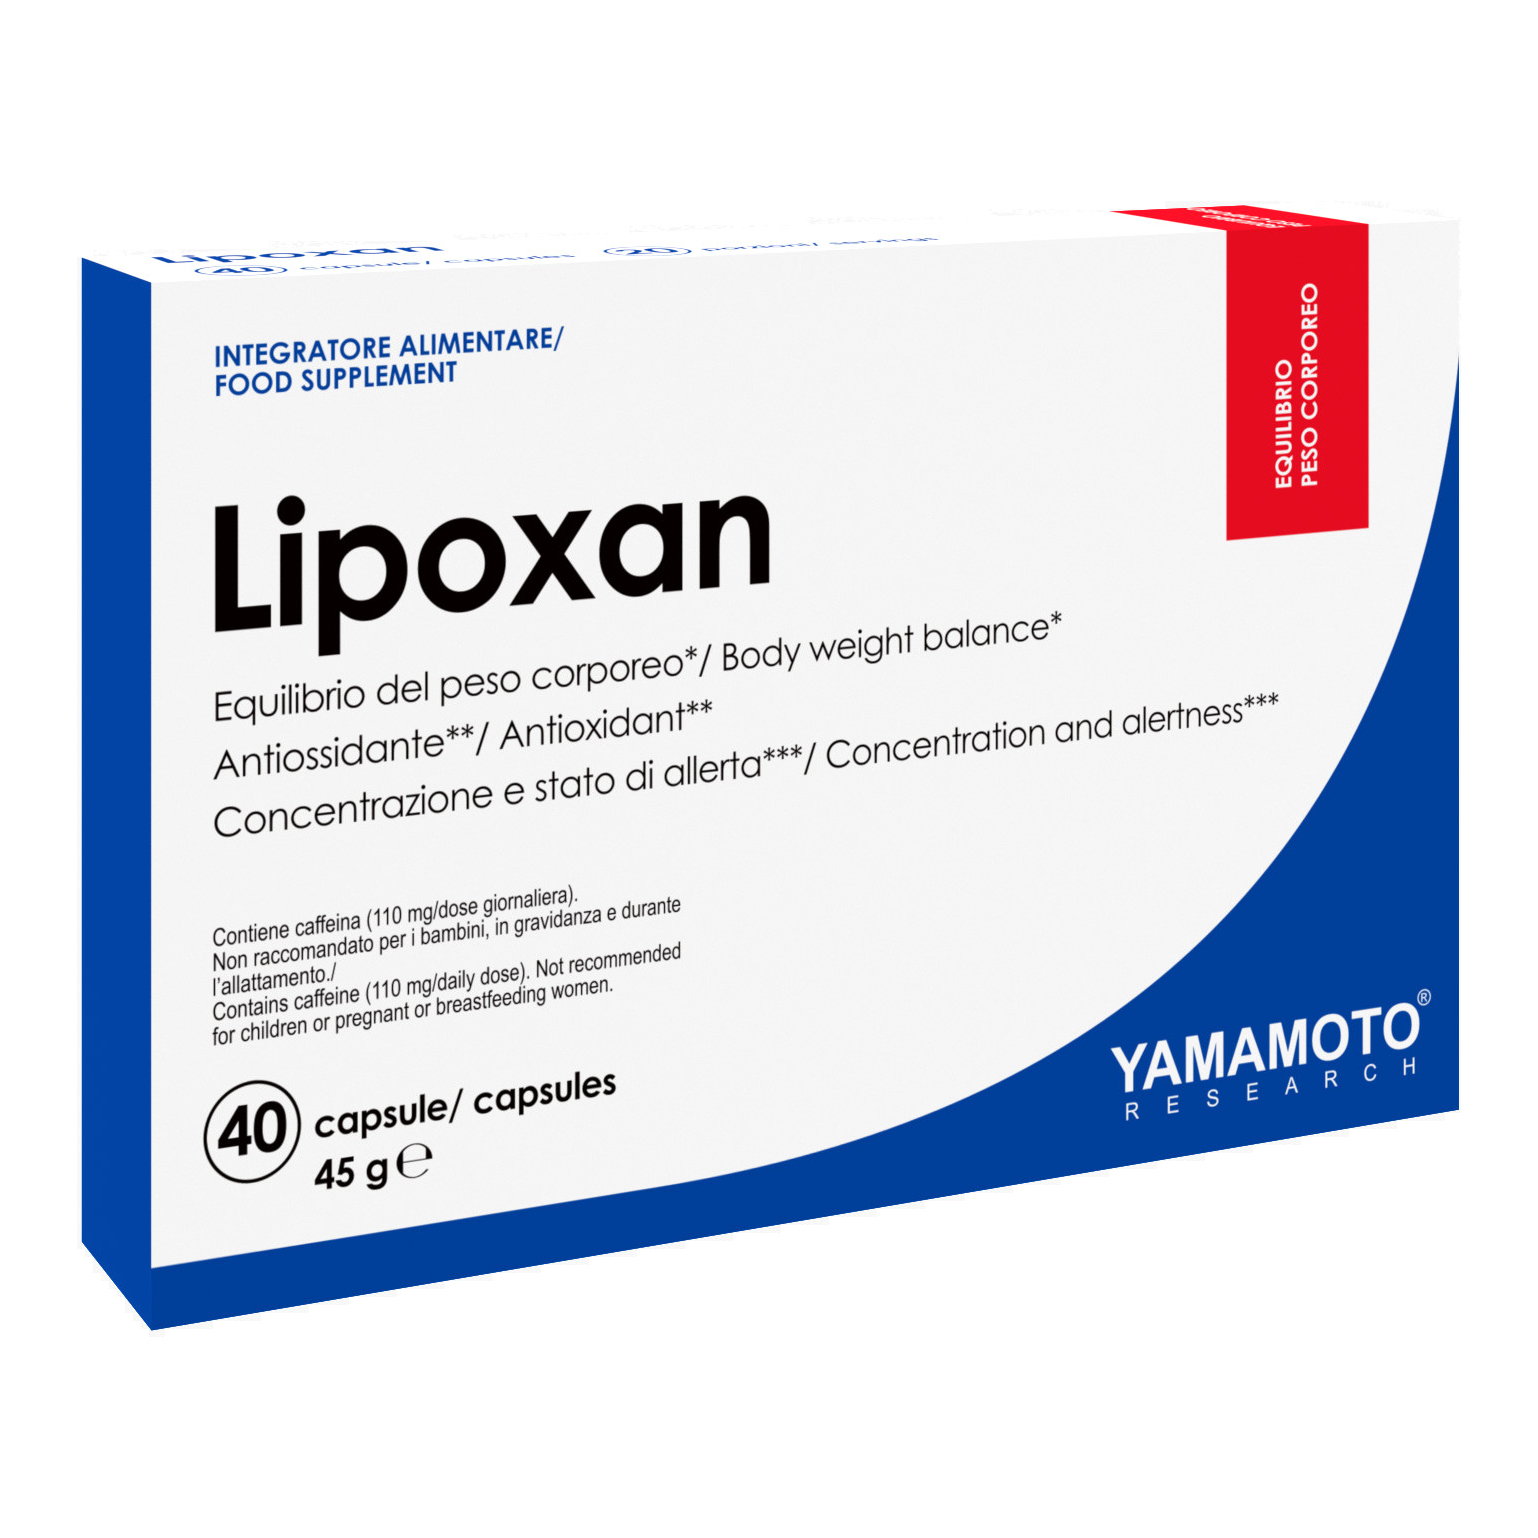 Lipoxan 40 capsule